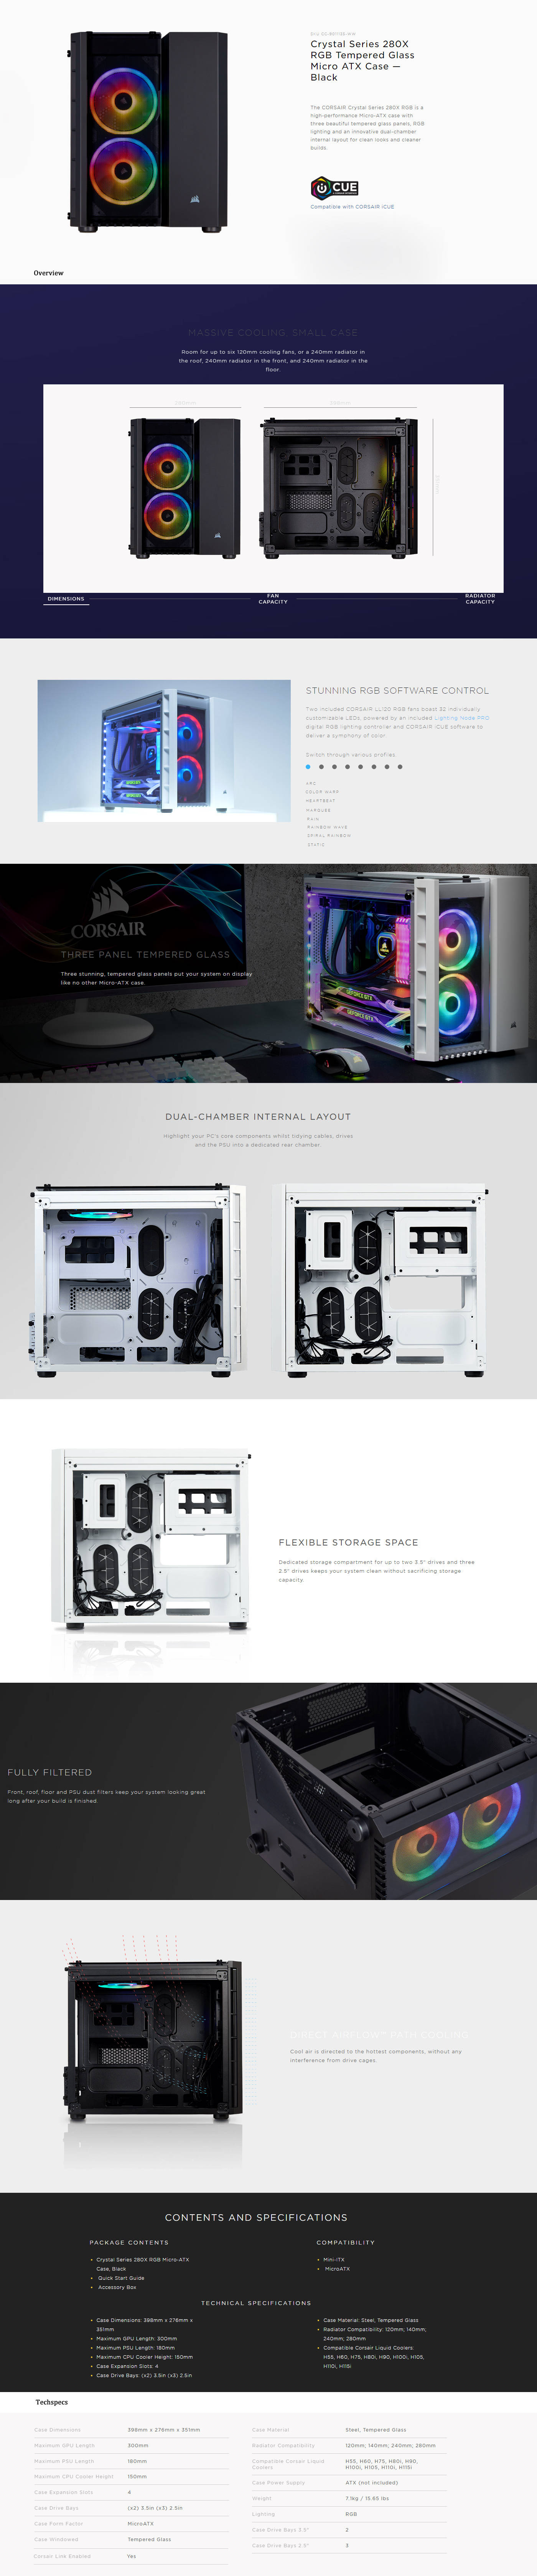  Buy Online Corsair Crystal Series 280X RGB Tempered Glass Micro ATX Case - Black (CC-9011135-WW)